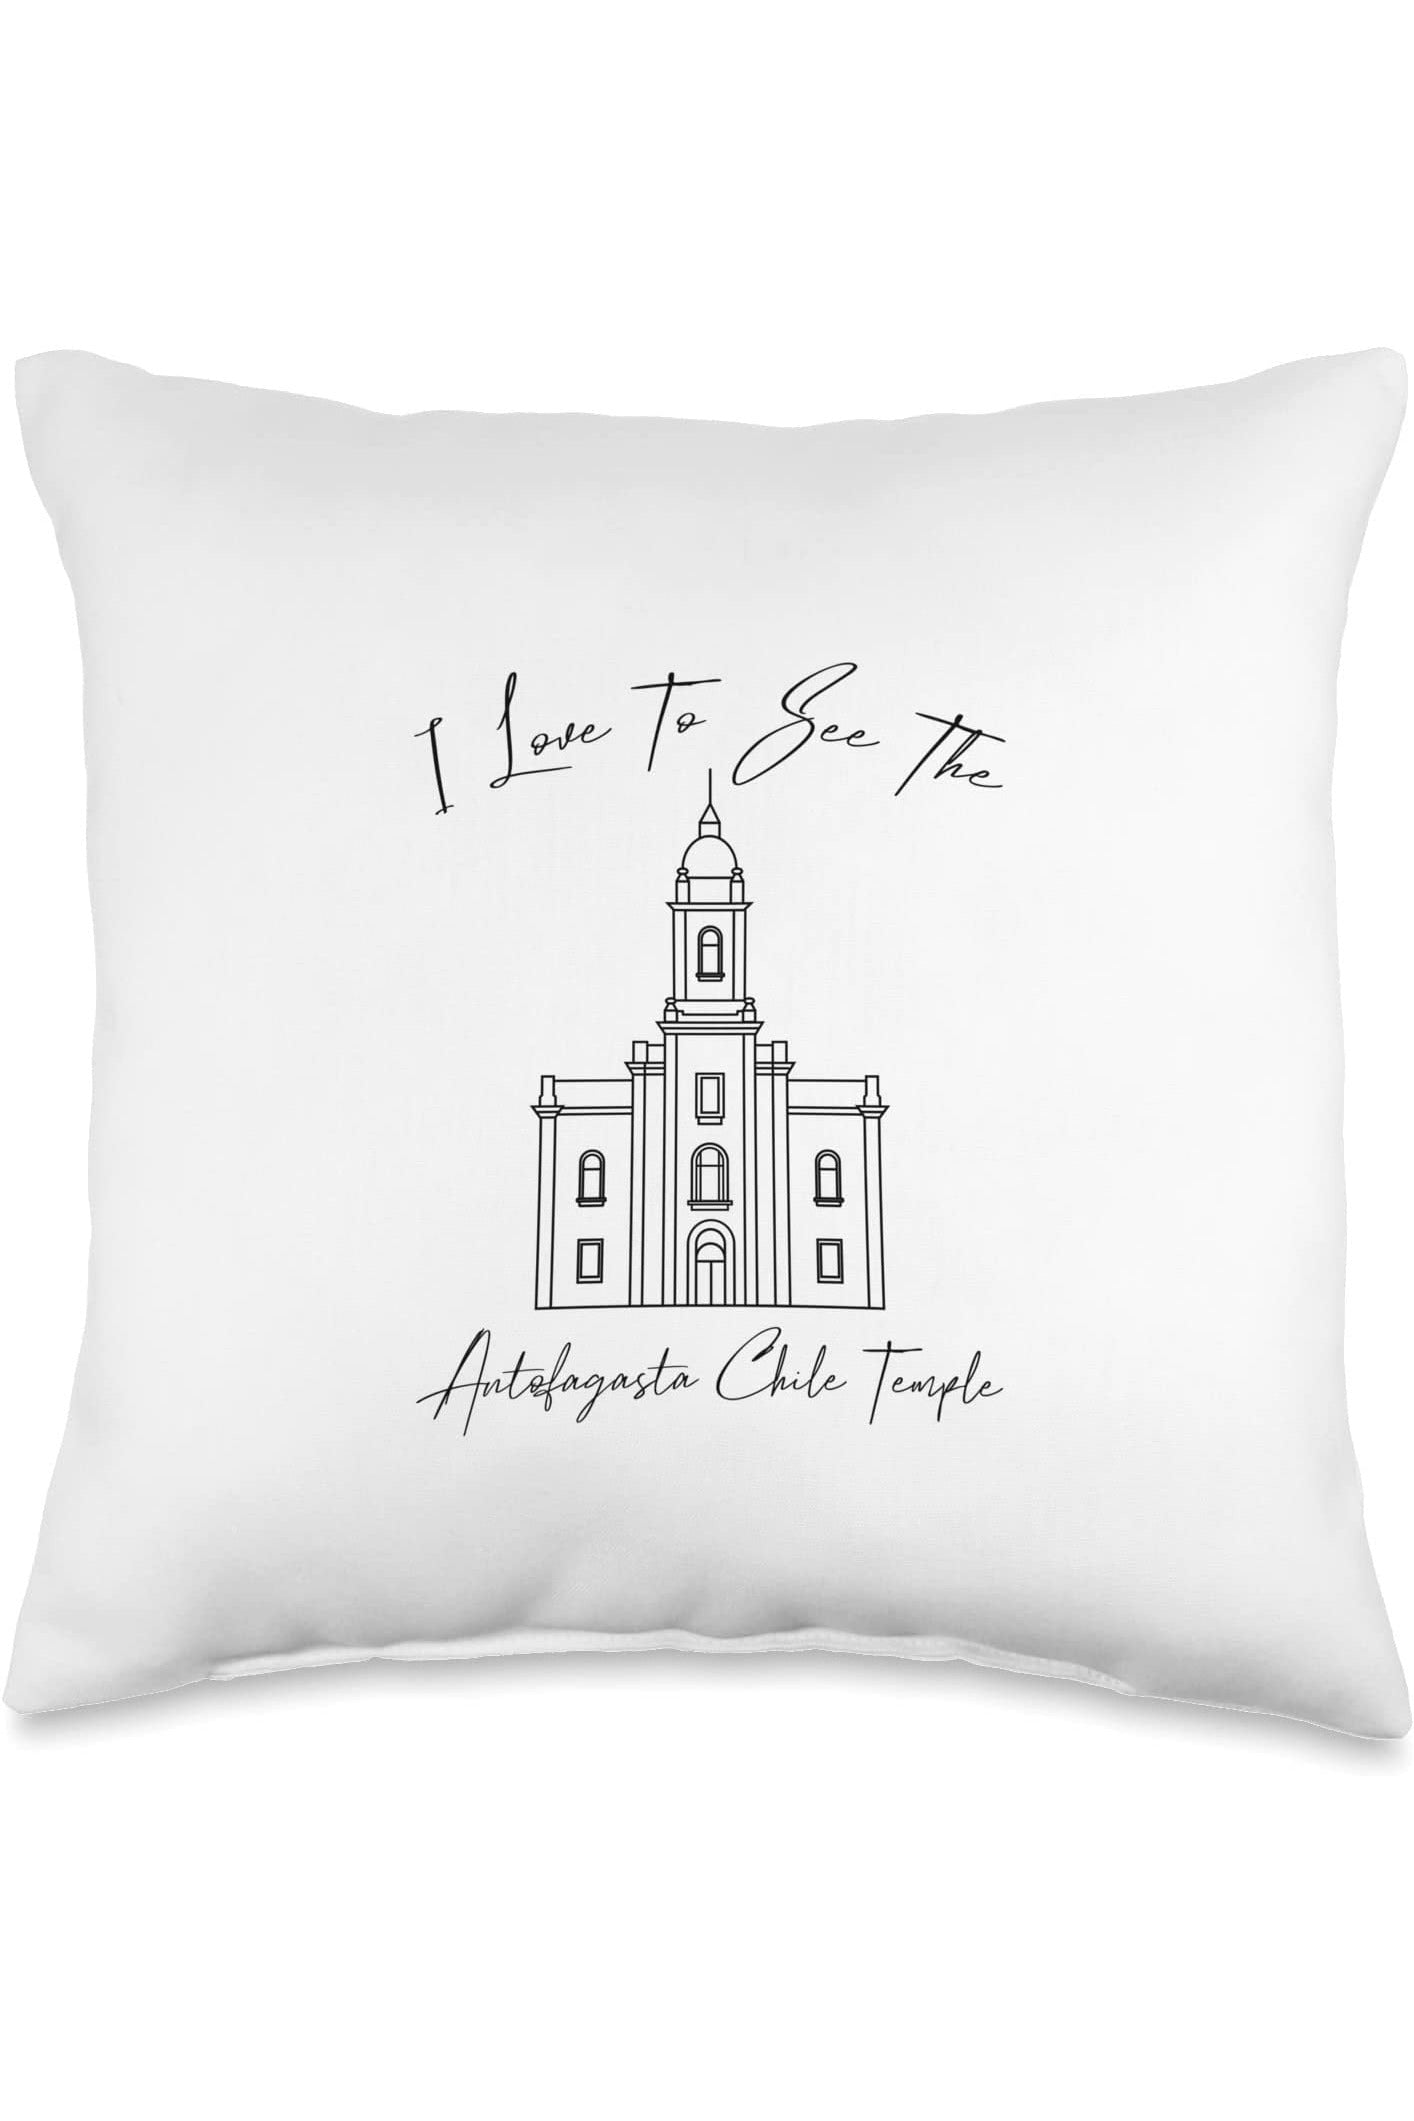 Antofagasta Chile Temple Throw Pillows - Calligraphy Style (English) US